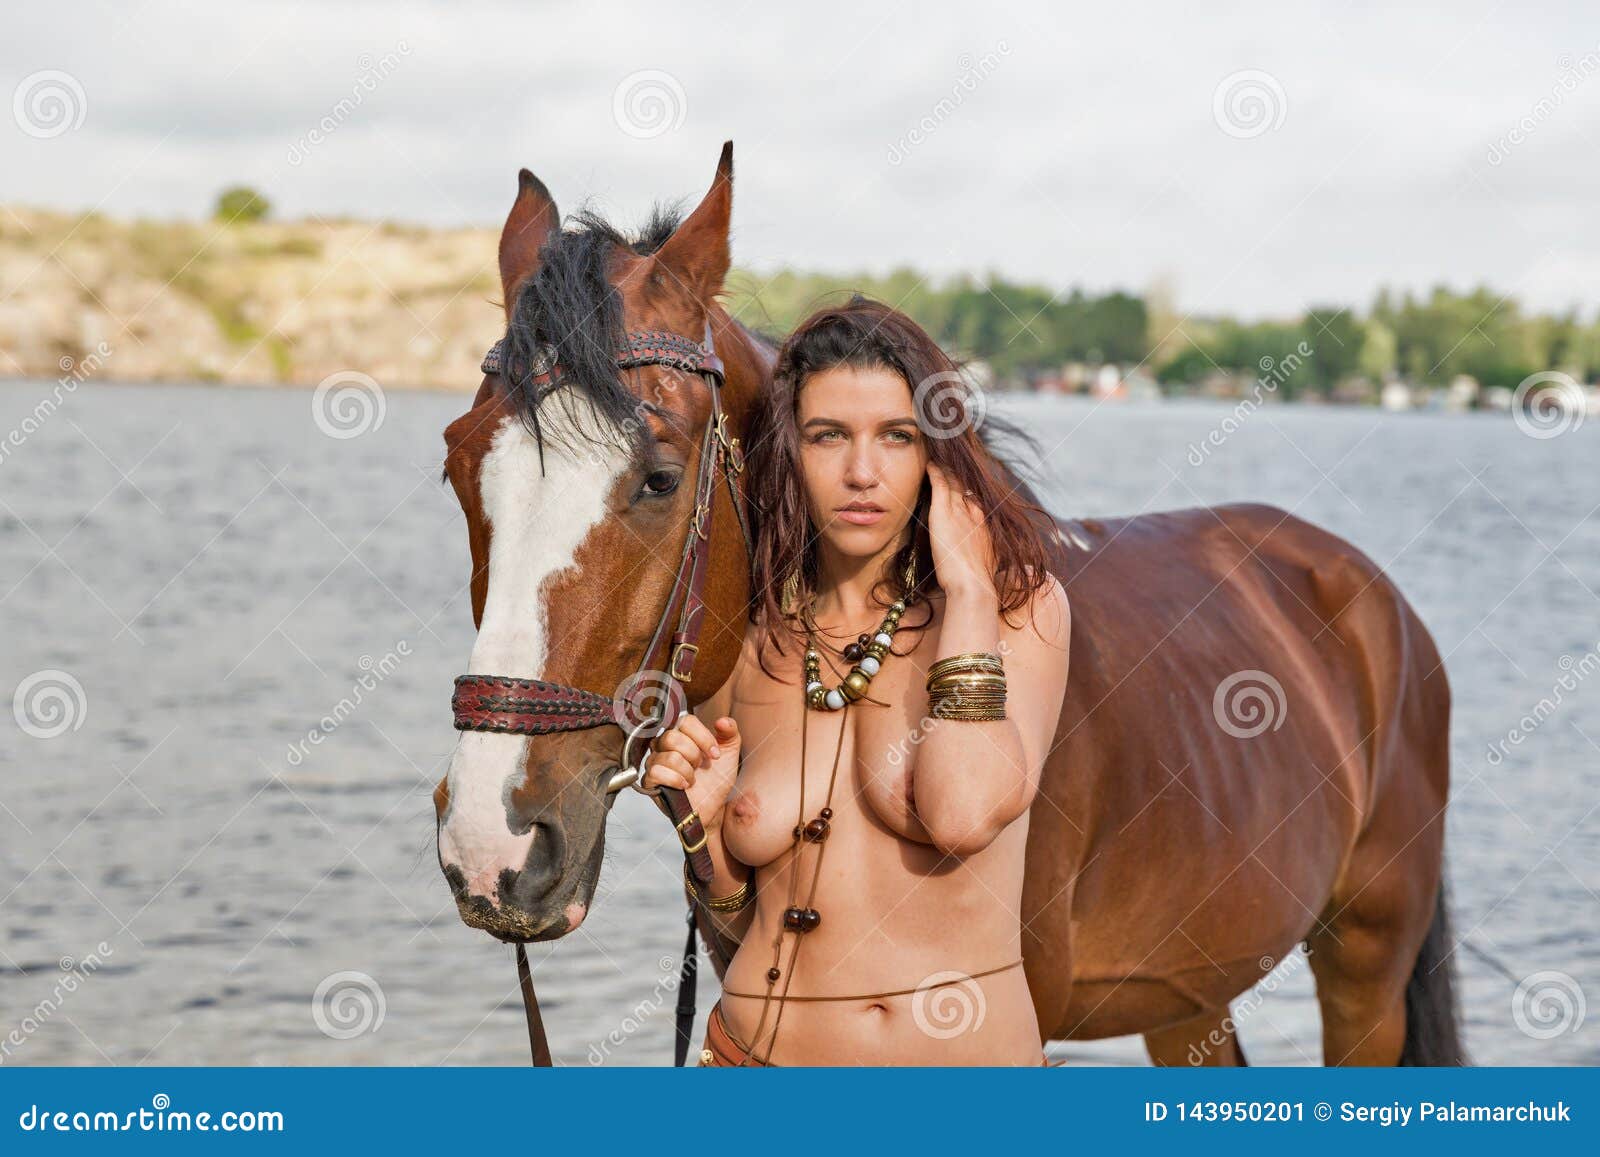 Nude Girl On Horses Kansas City Naked Dancers